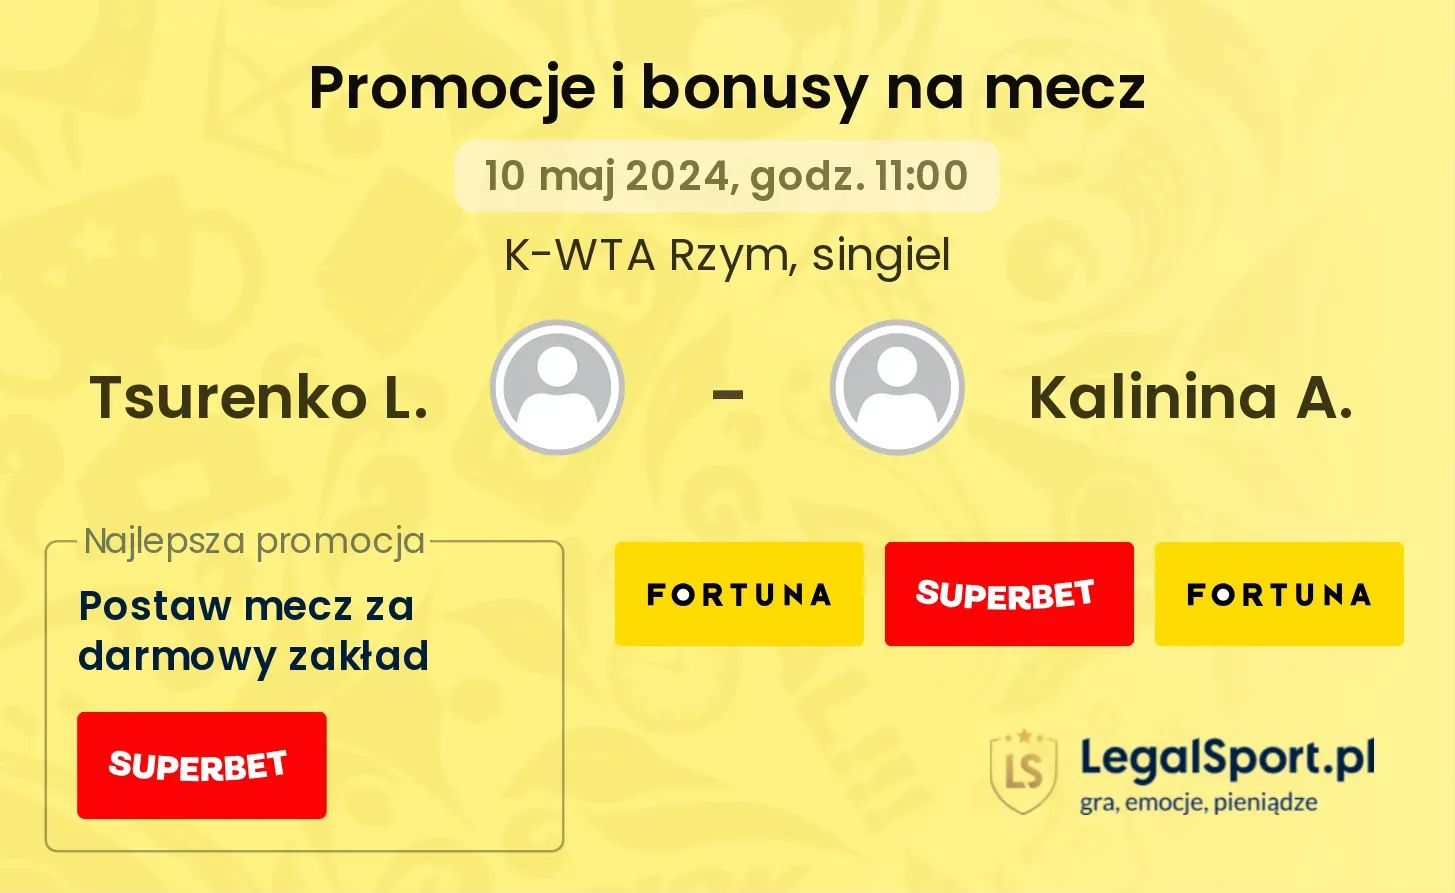 Tsurenko L. - Kalinina A. promocje bonusy na mecz